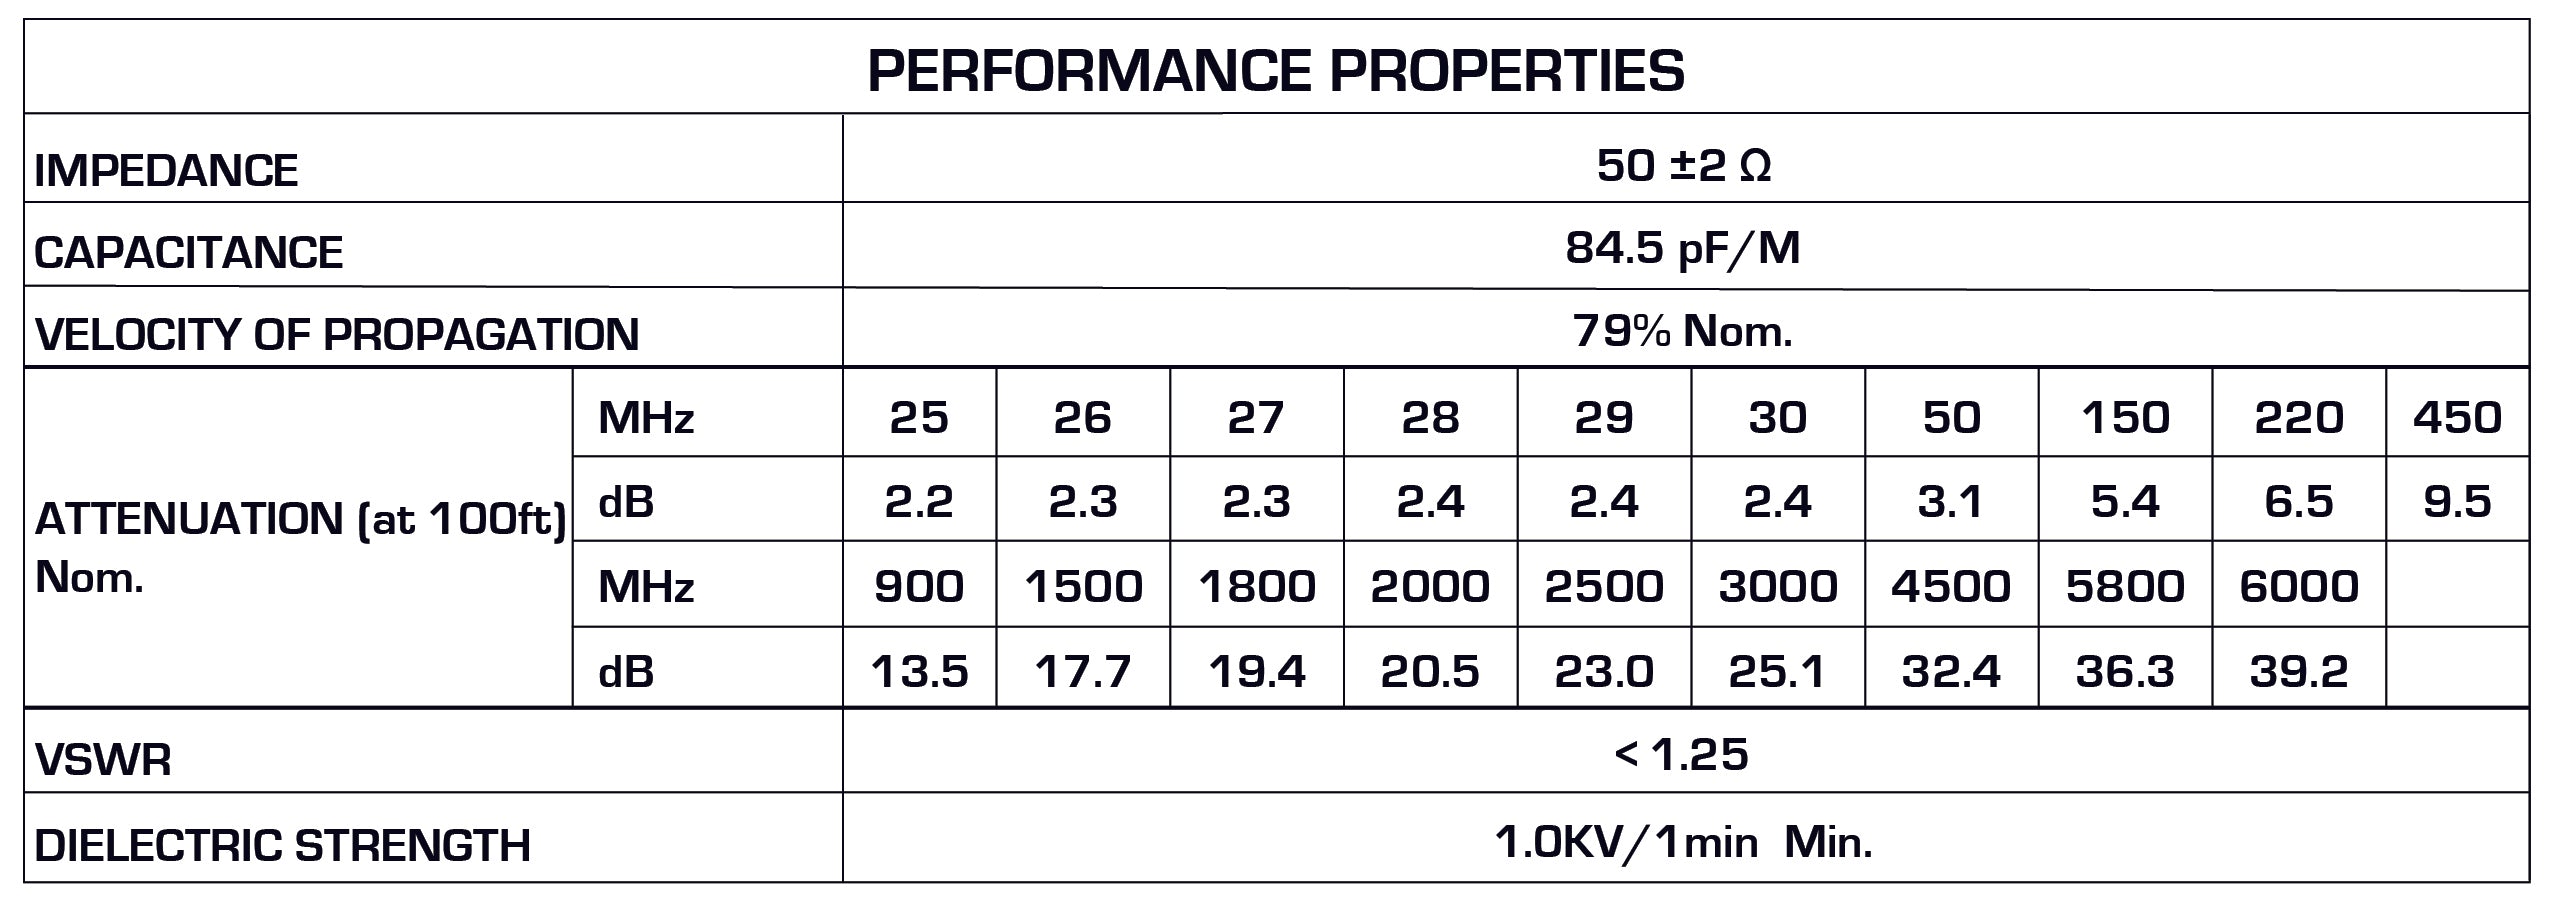 Performance properties chart